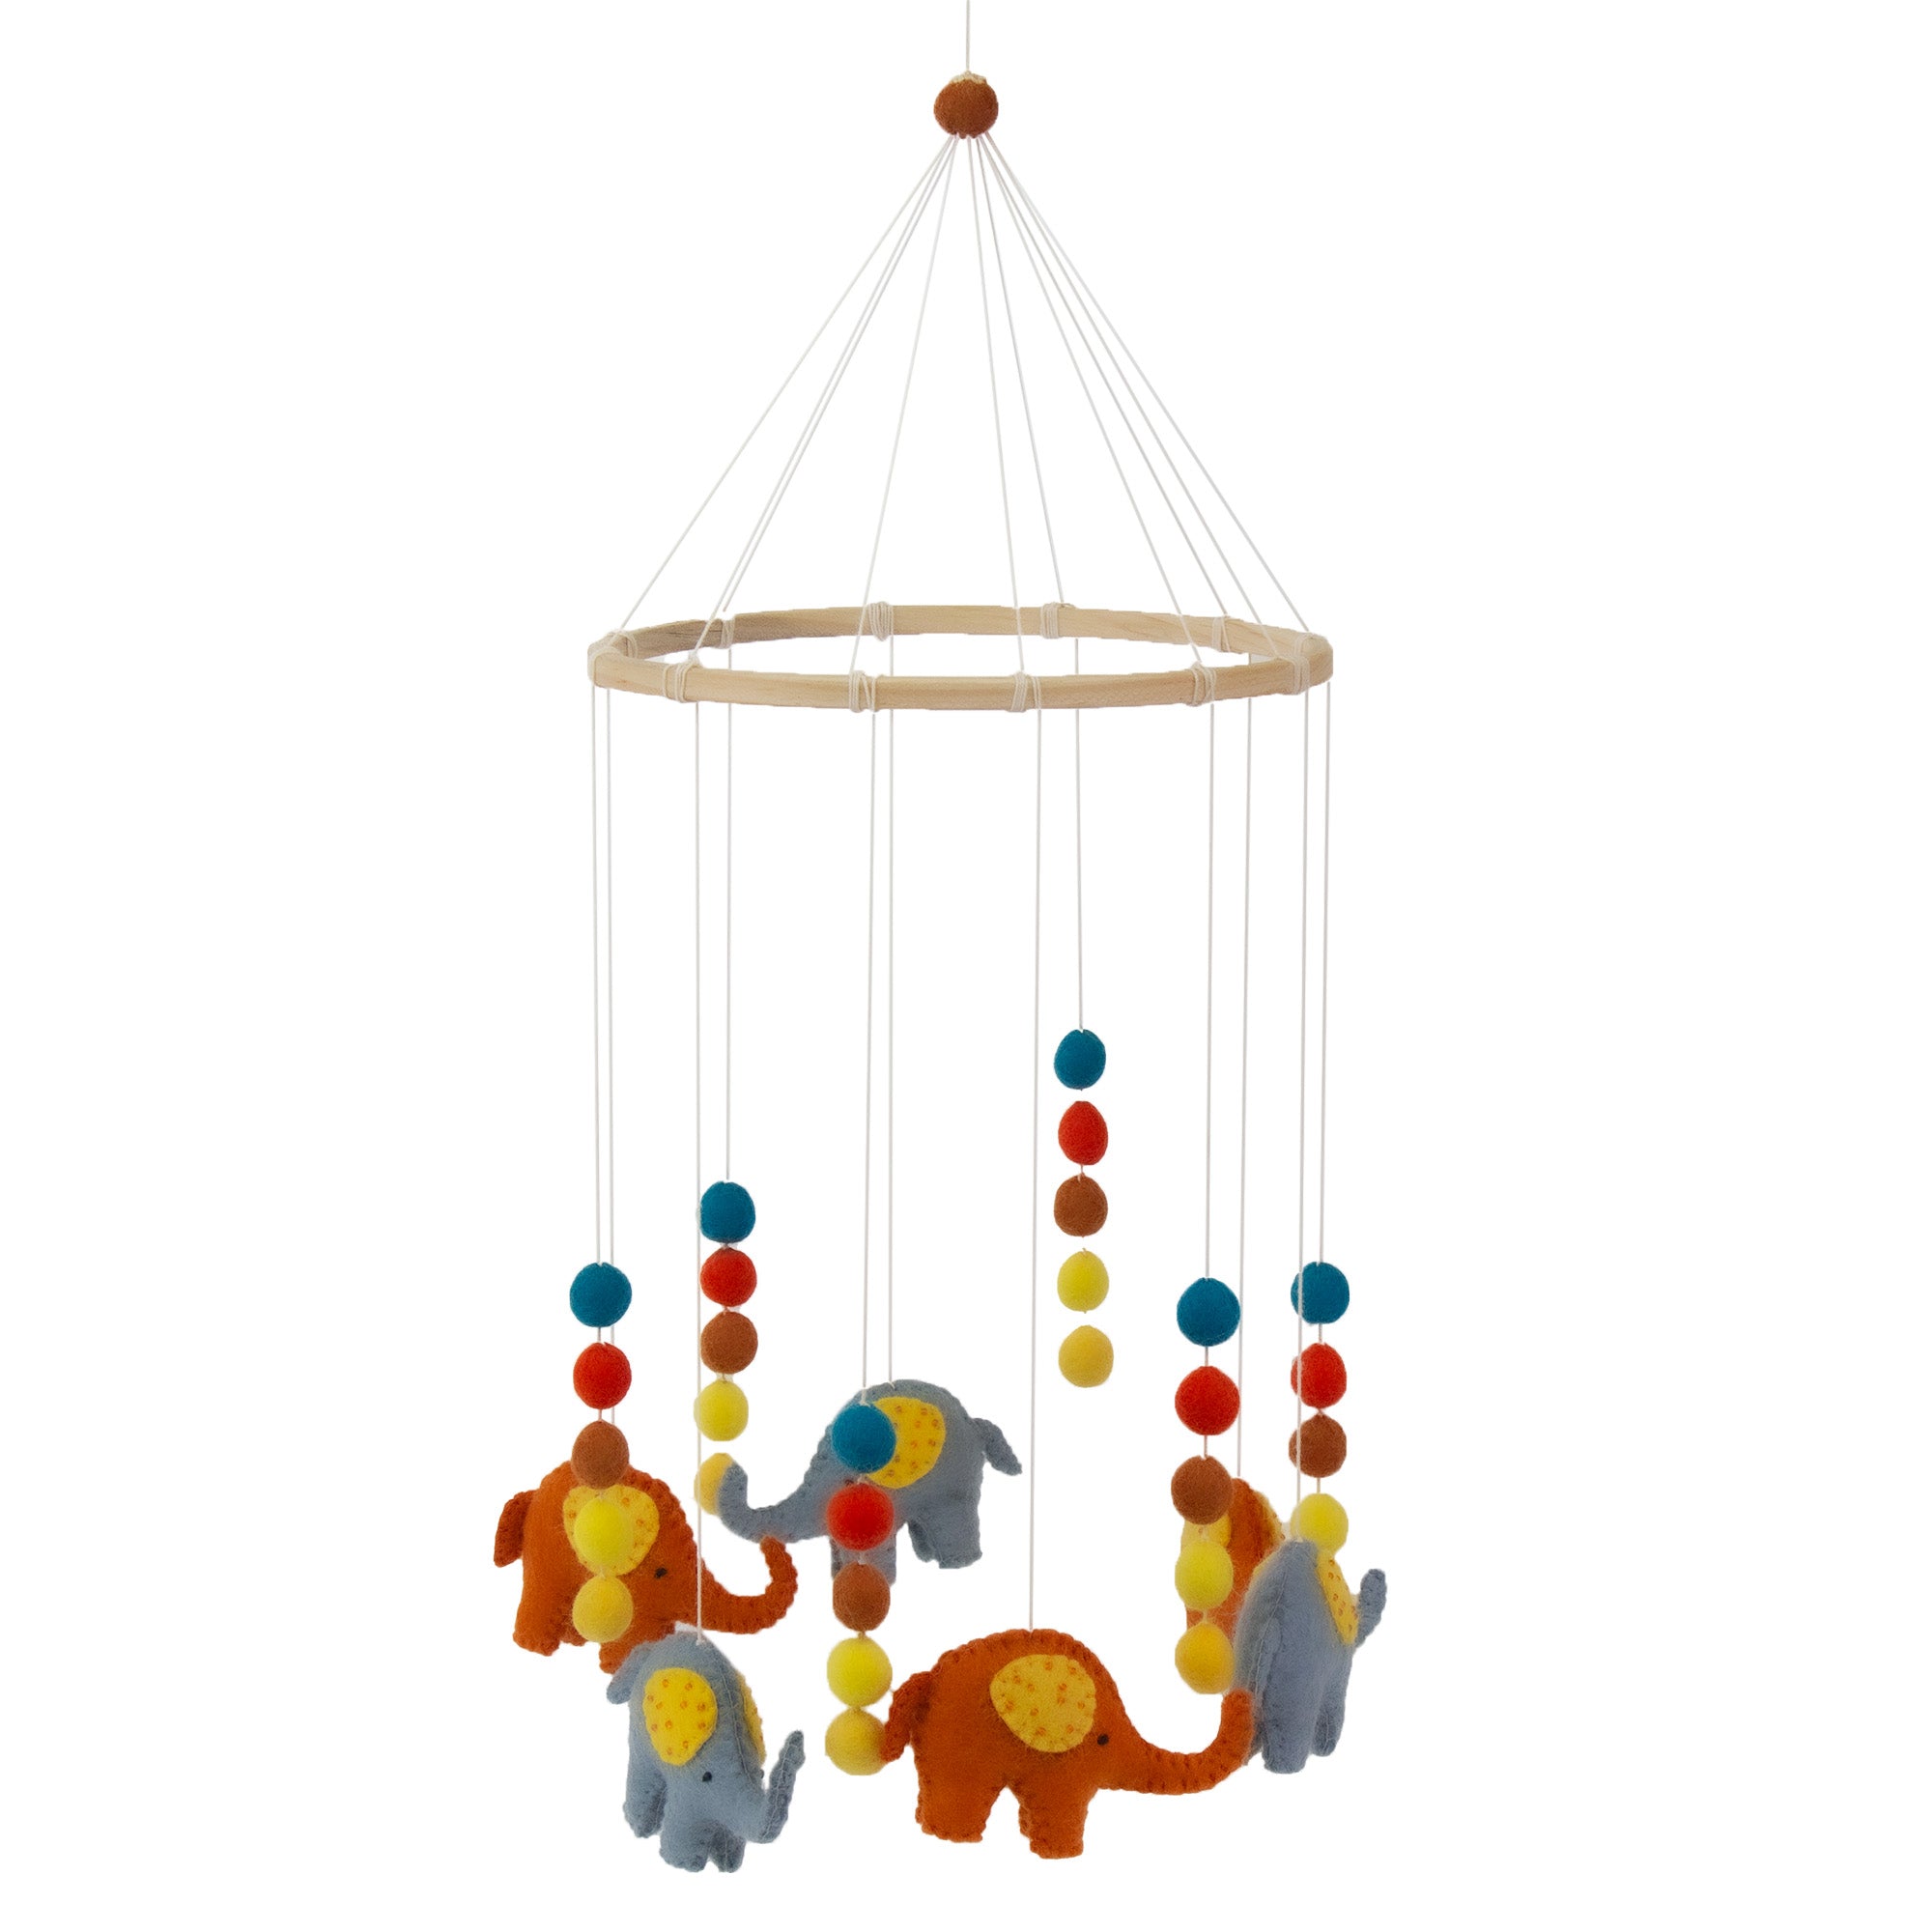 Mobile Elephant Circus Decor for Nursery, Kids or Home Decoration